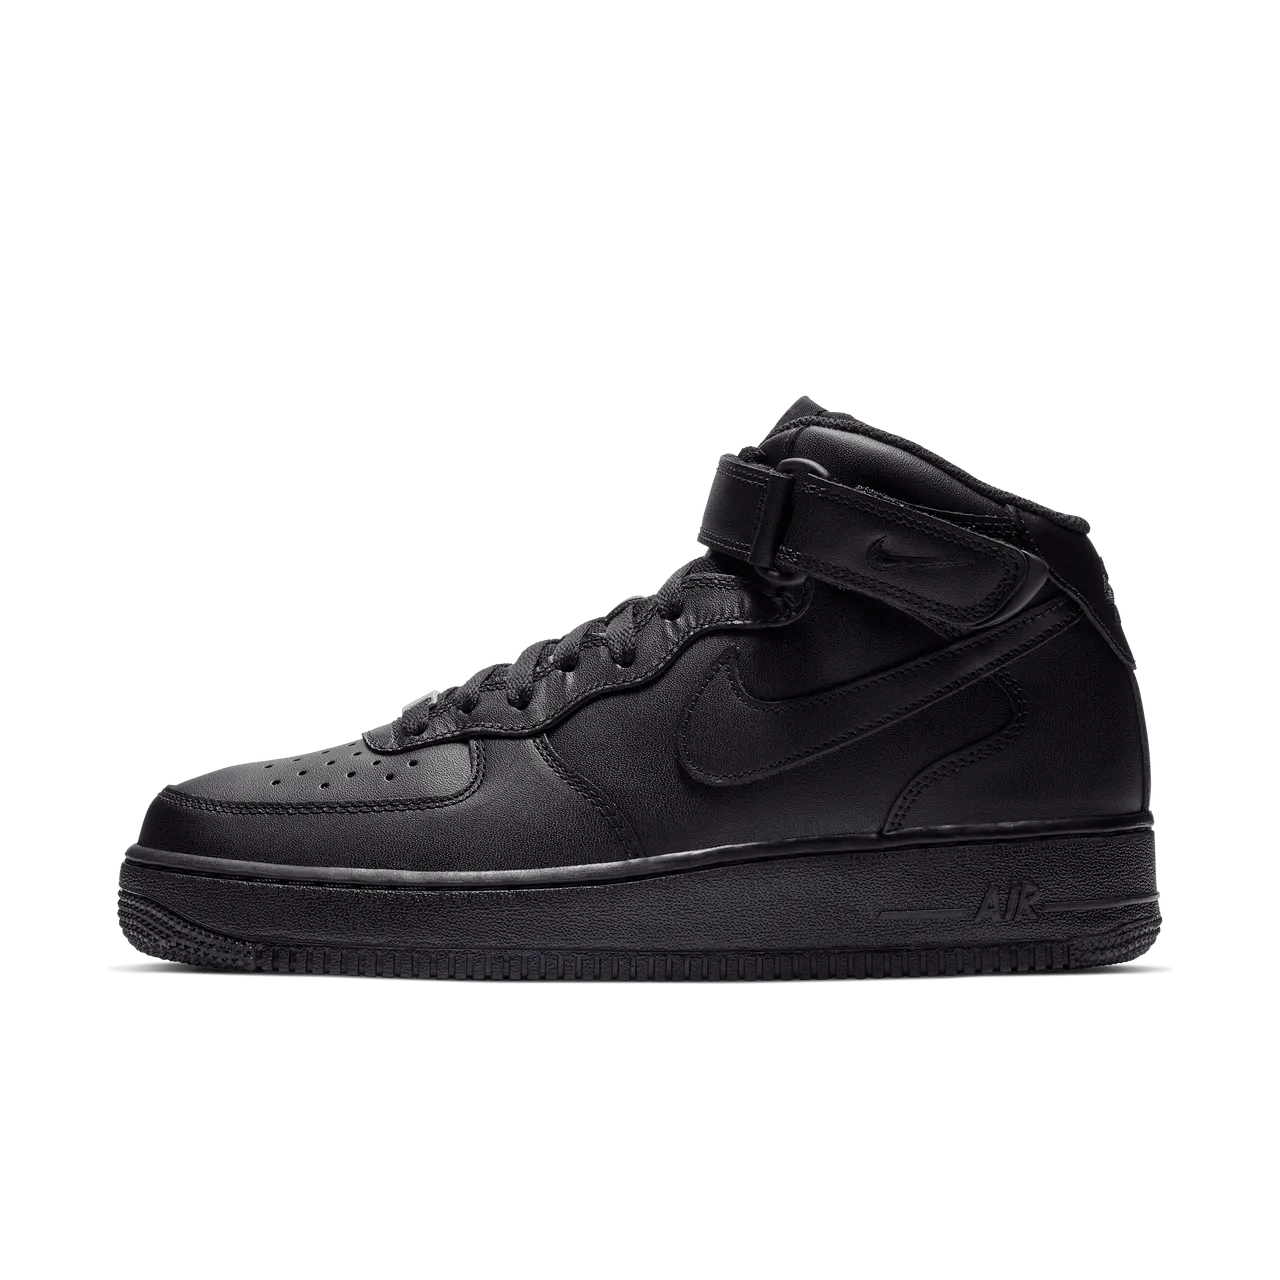 Nike Air Force 1 Mid '07 Men's Shoe - Black